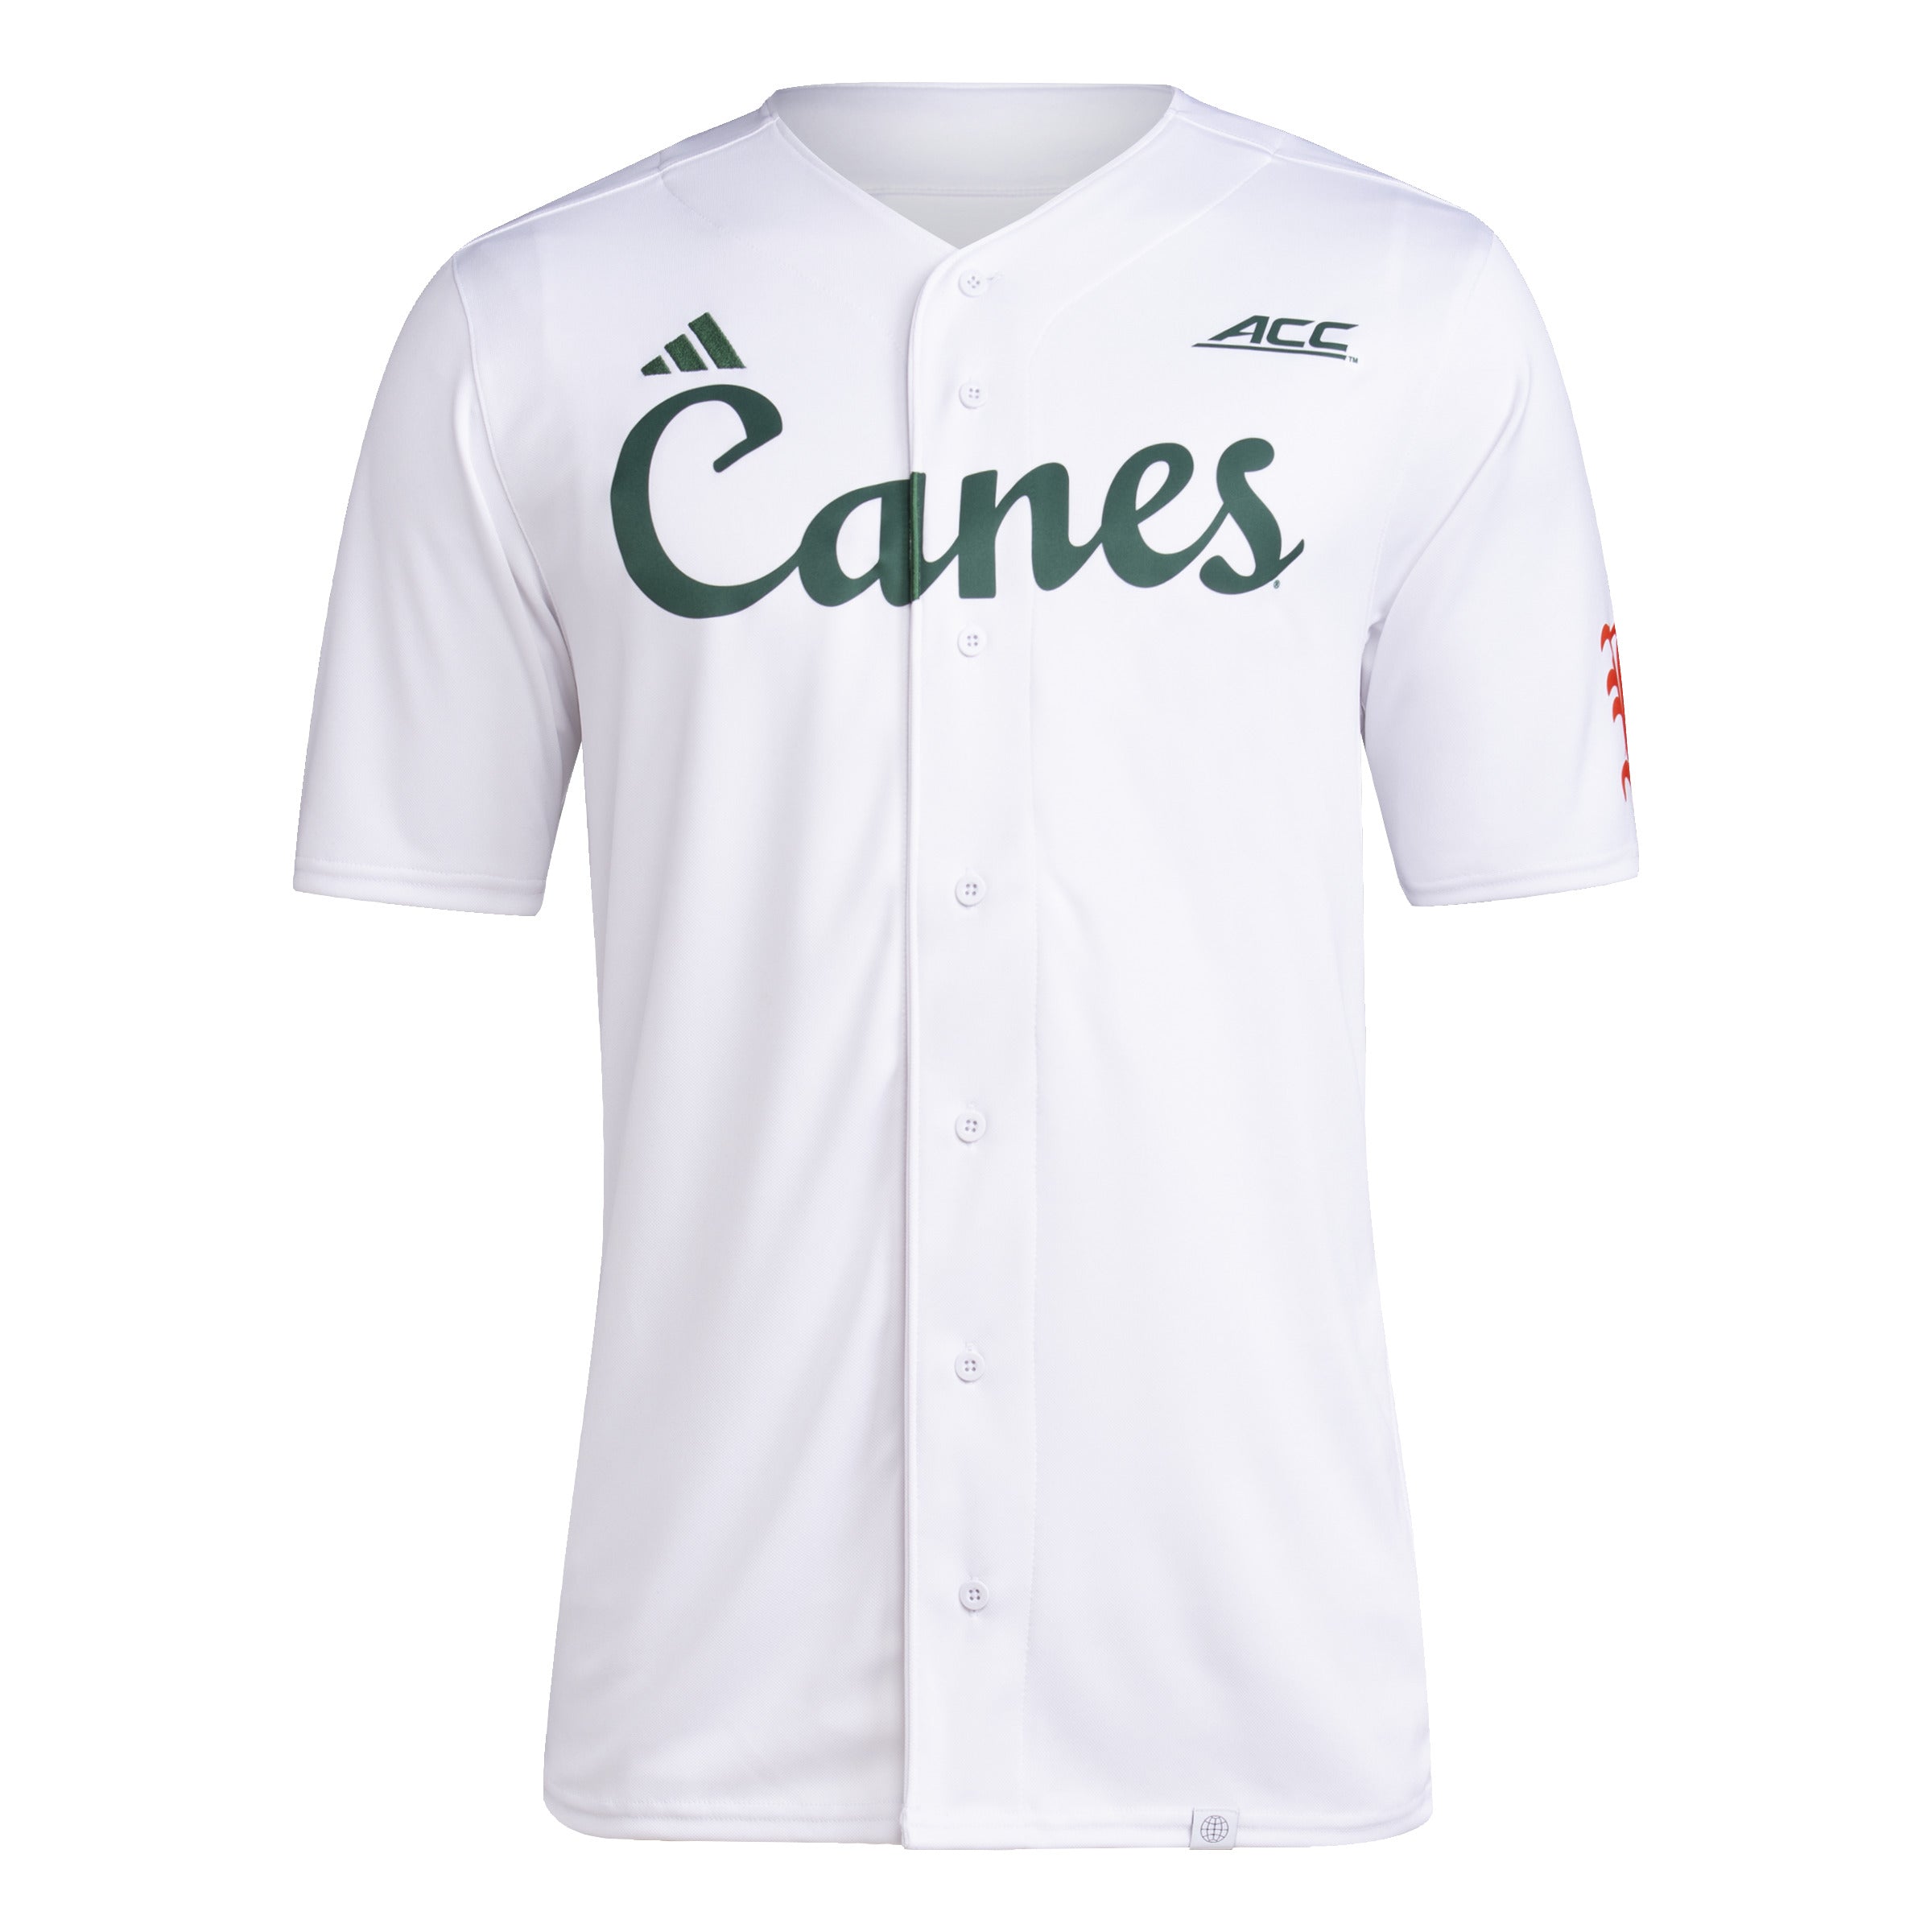 Miami Hurricanes adidas Canes Baseball Jersey - White